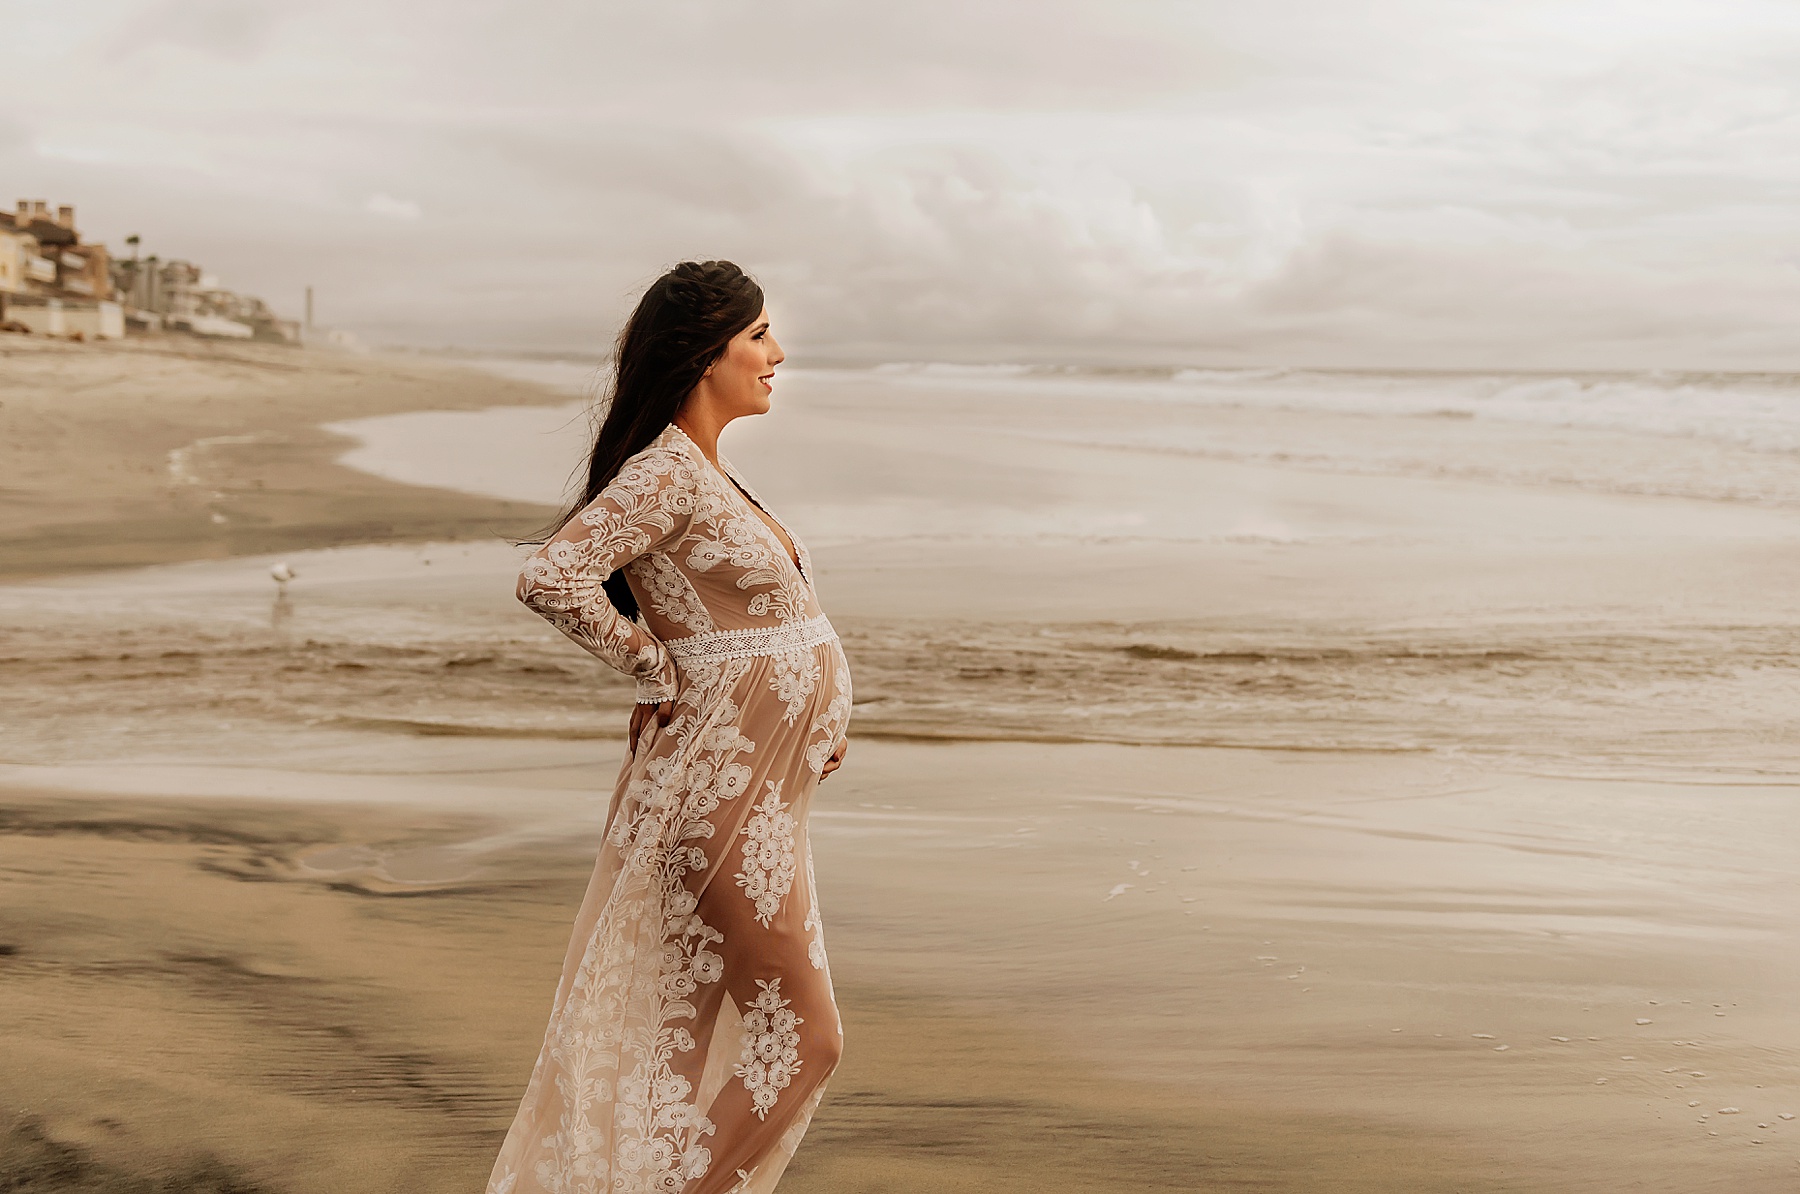 del mar beach maternity pictures pregnancy pose